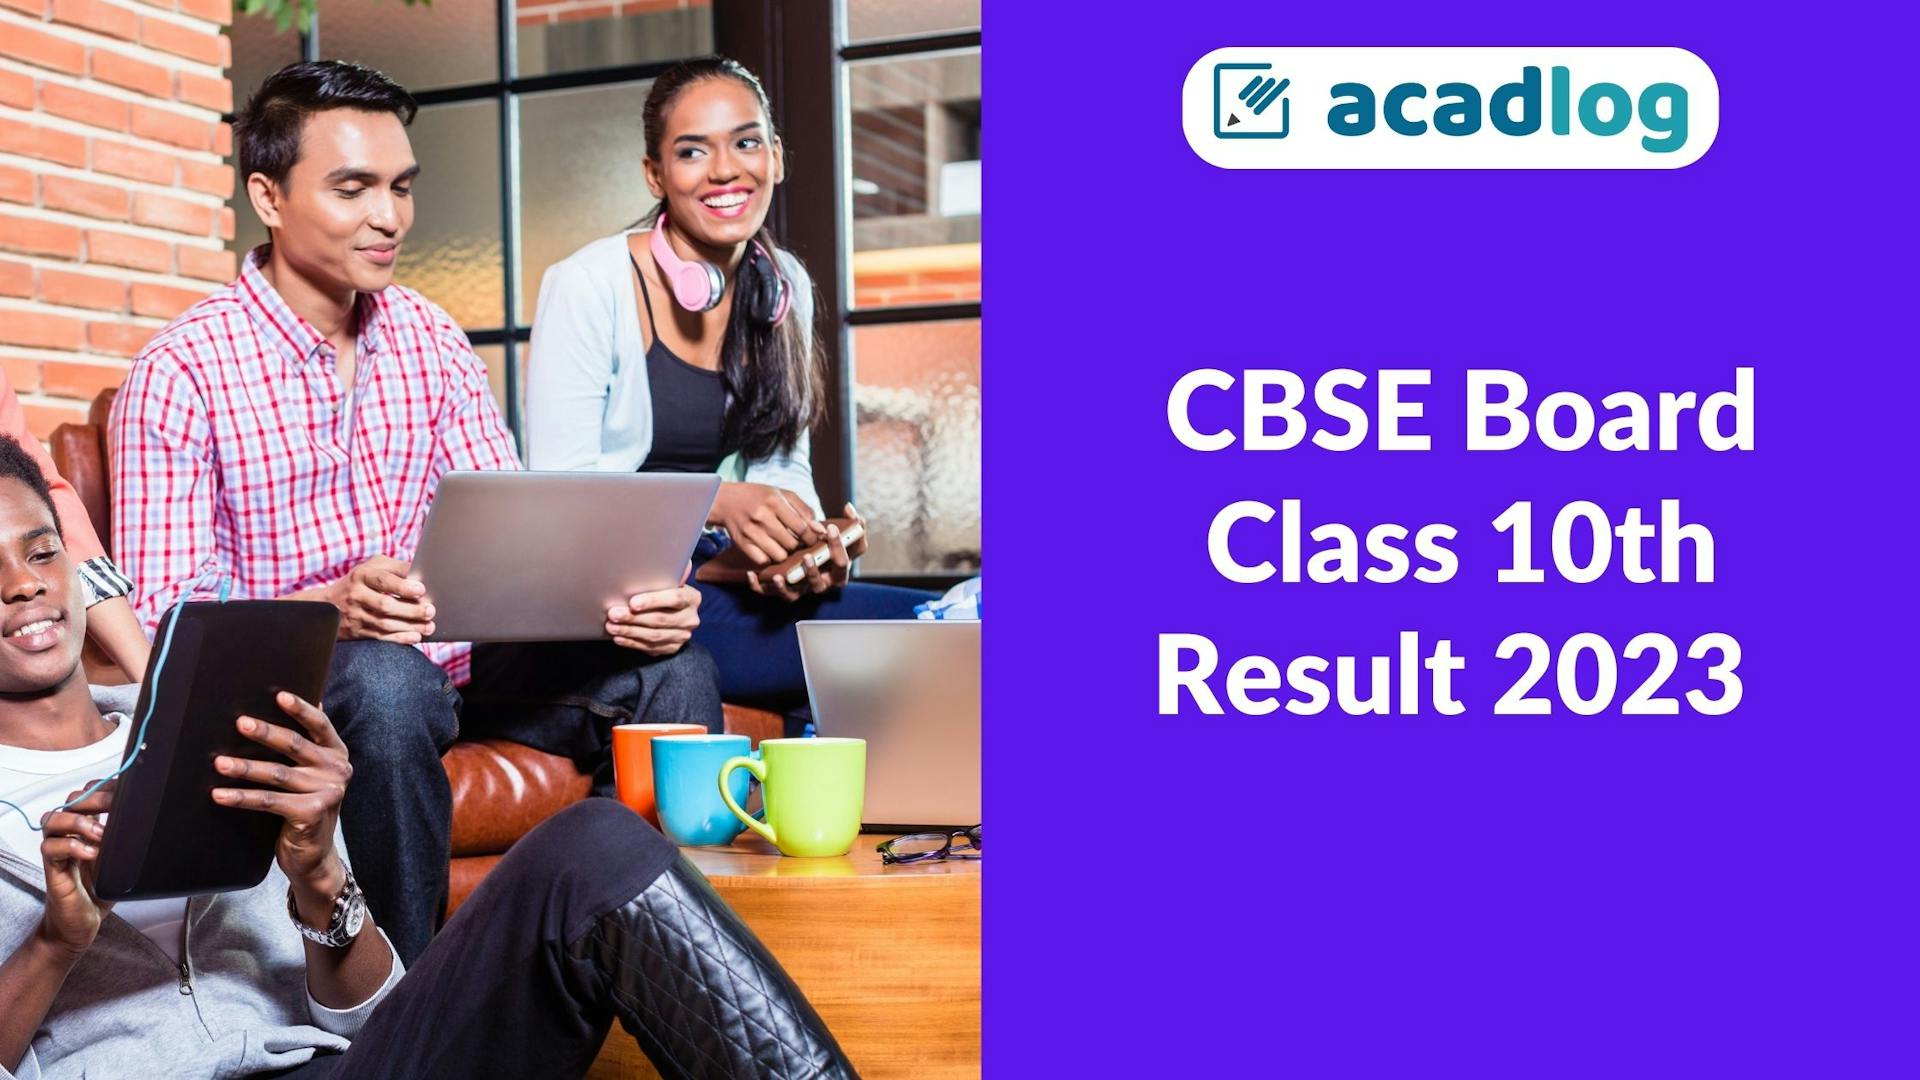 Acadlog: CBSE Board Class 12th Inter & 10th Results 2023 - CBSE DigiLocker Account Activation